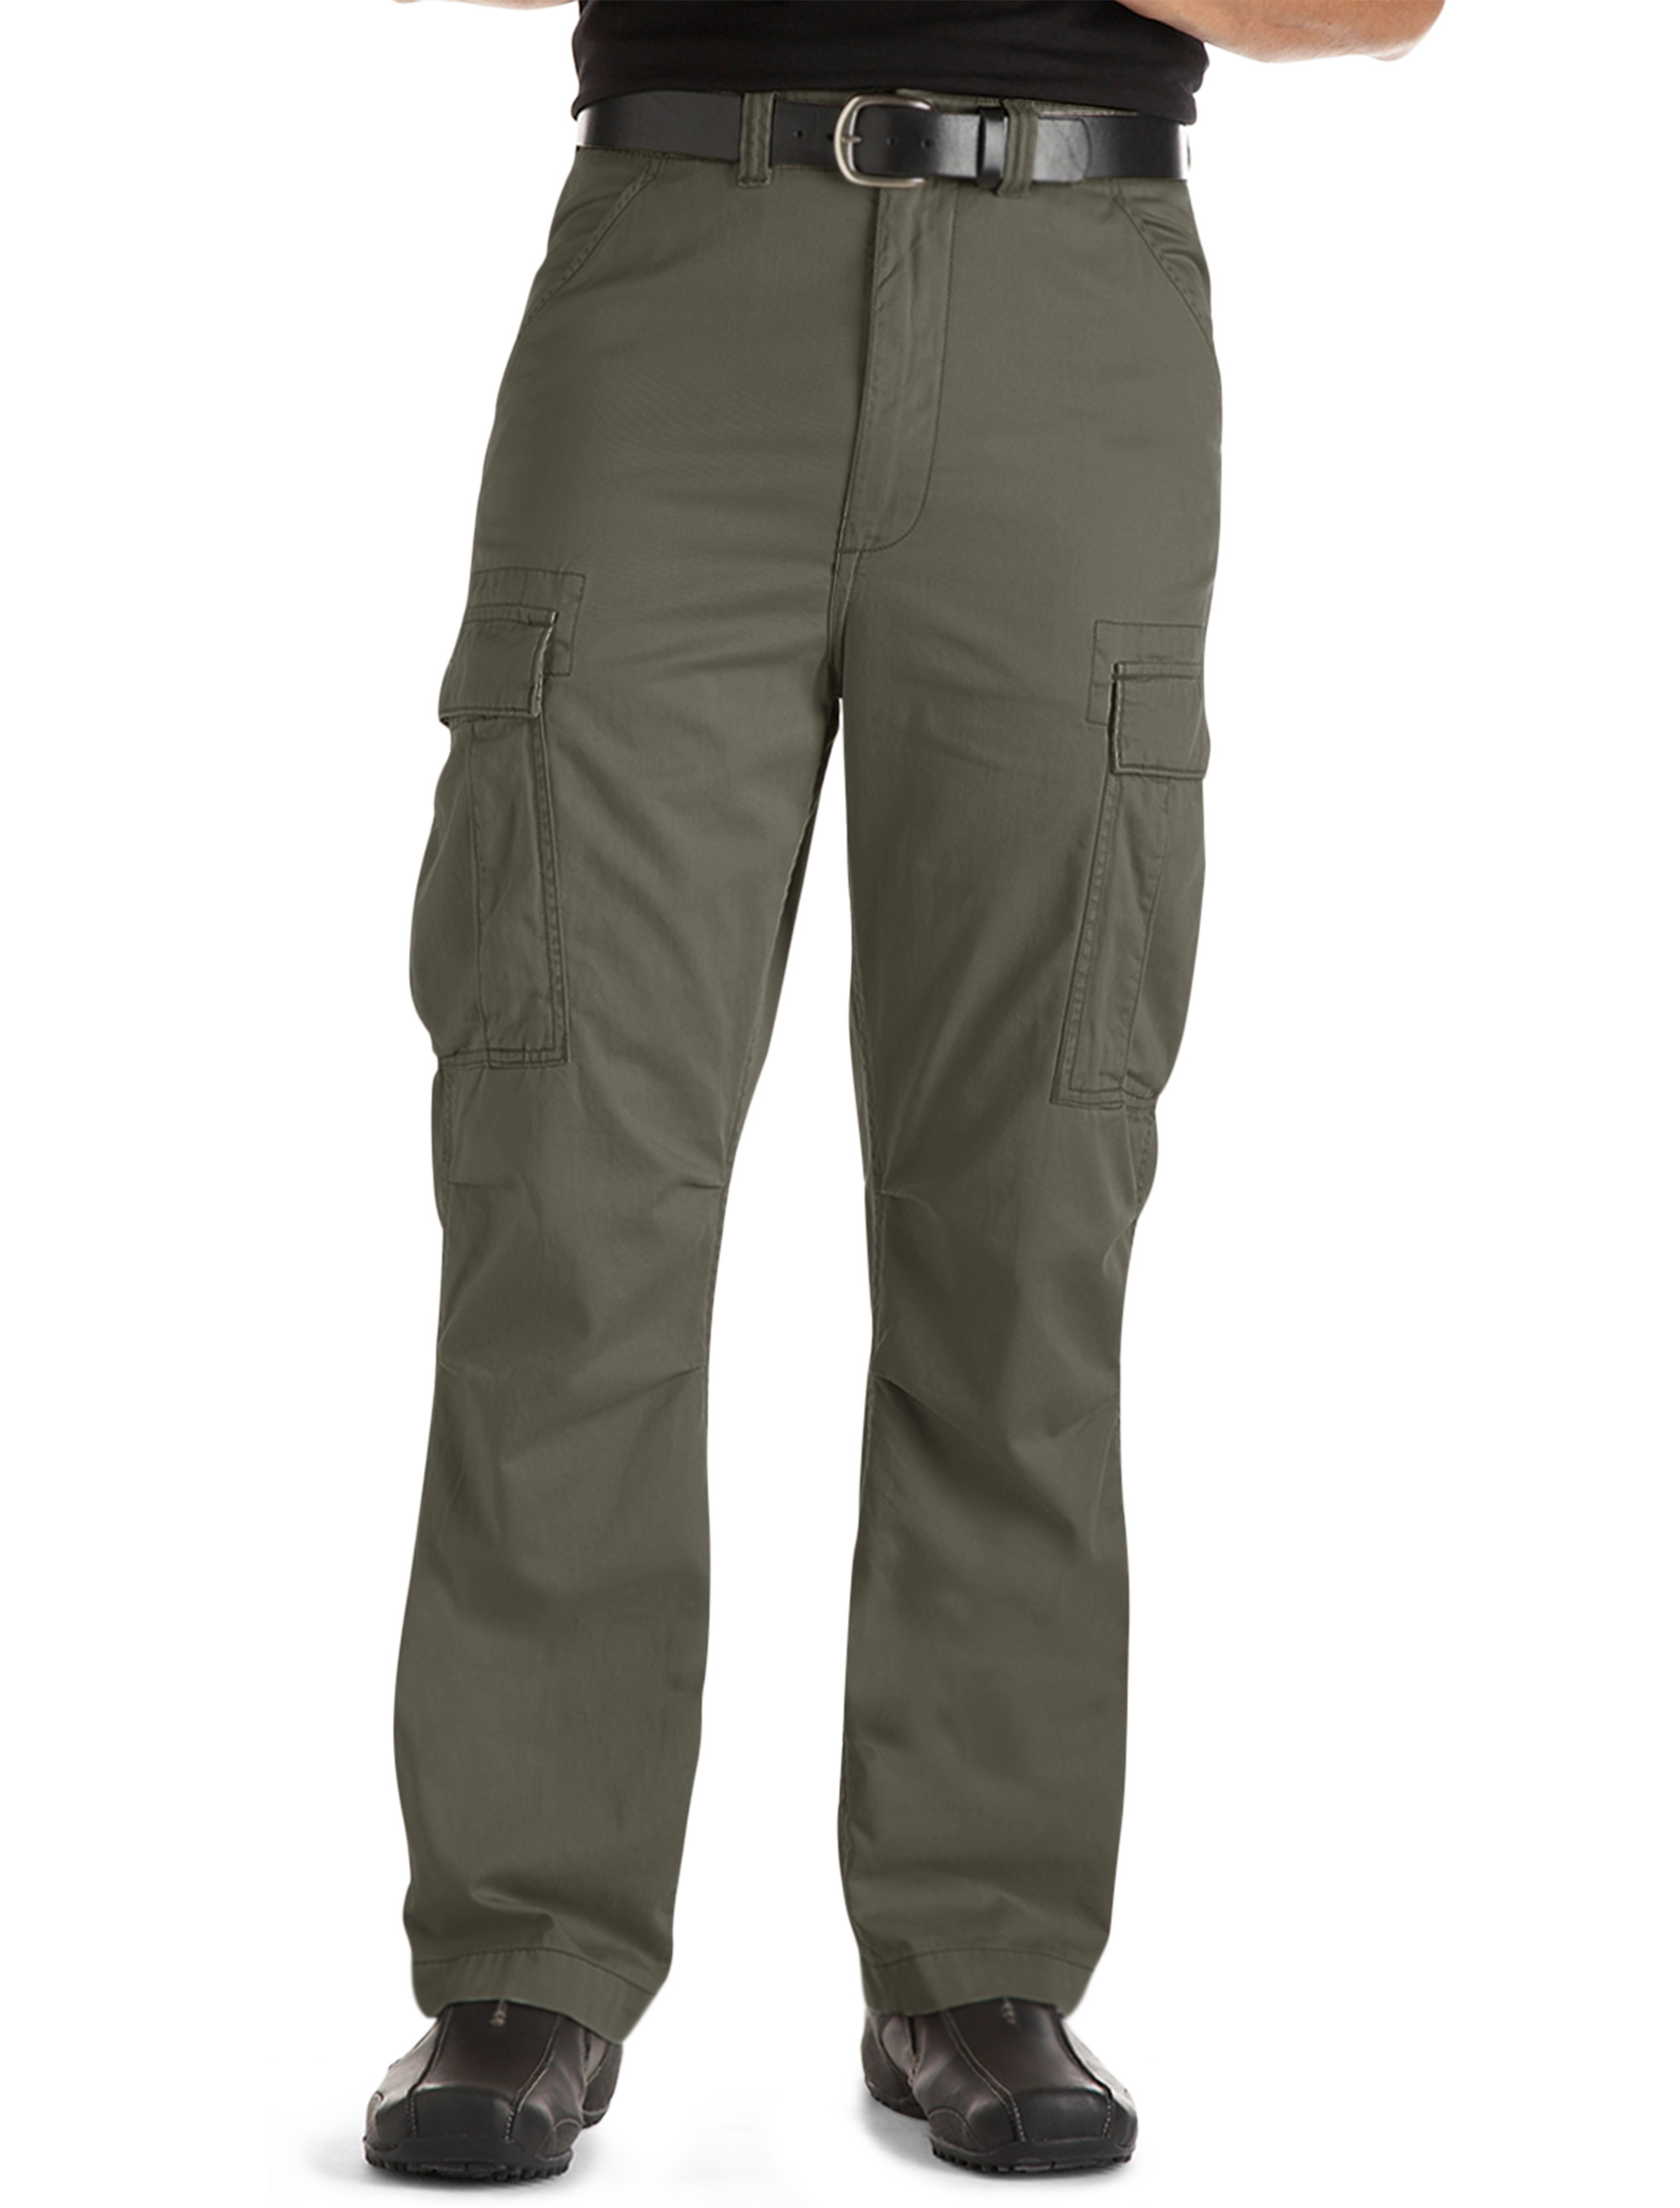 True Nation Military Cargo Pants Casual Male XL Big & Tall | eBay